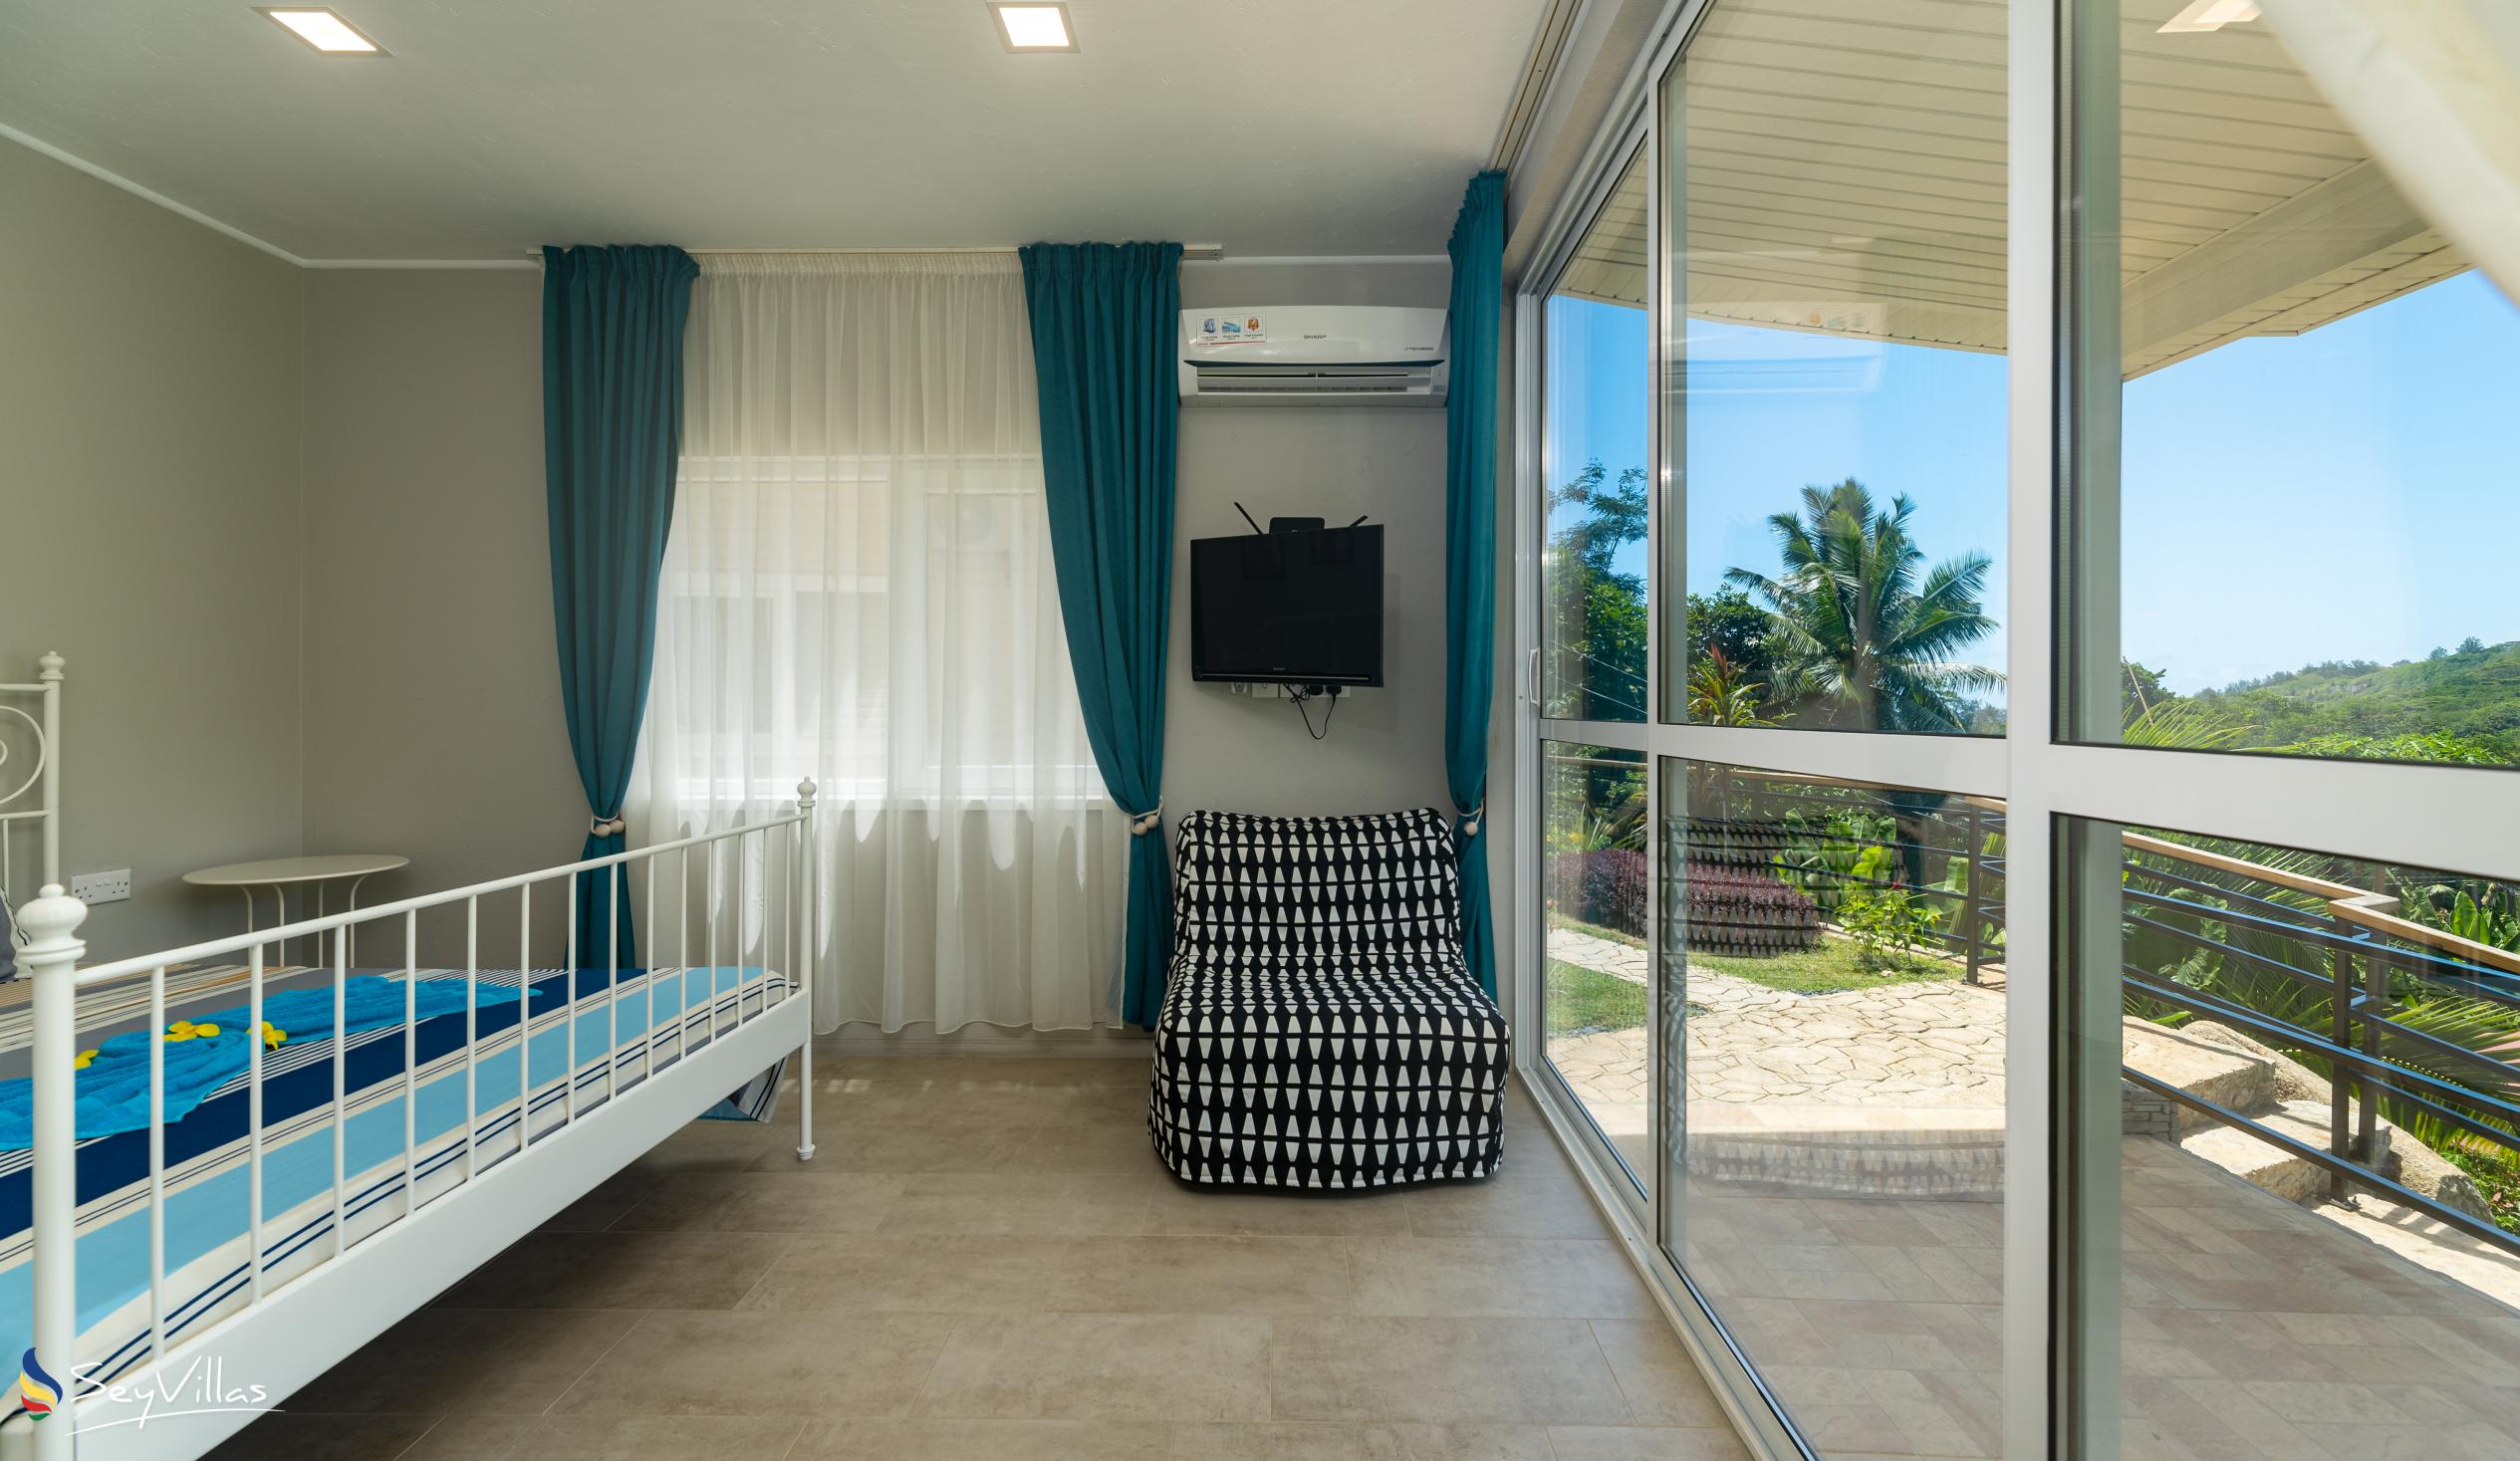 Foto 47: Takamaka Sky Villas - Villa mit 1 Schlafzimmer - Mahé (Seychellen)